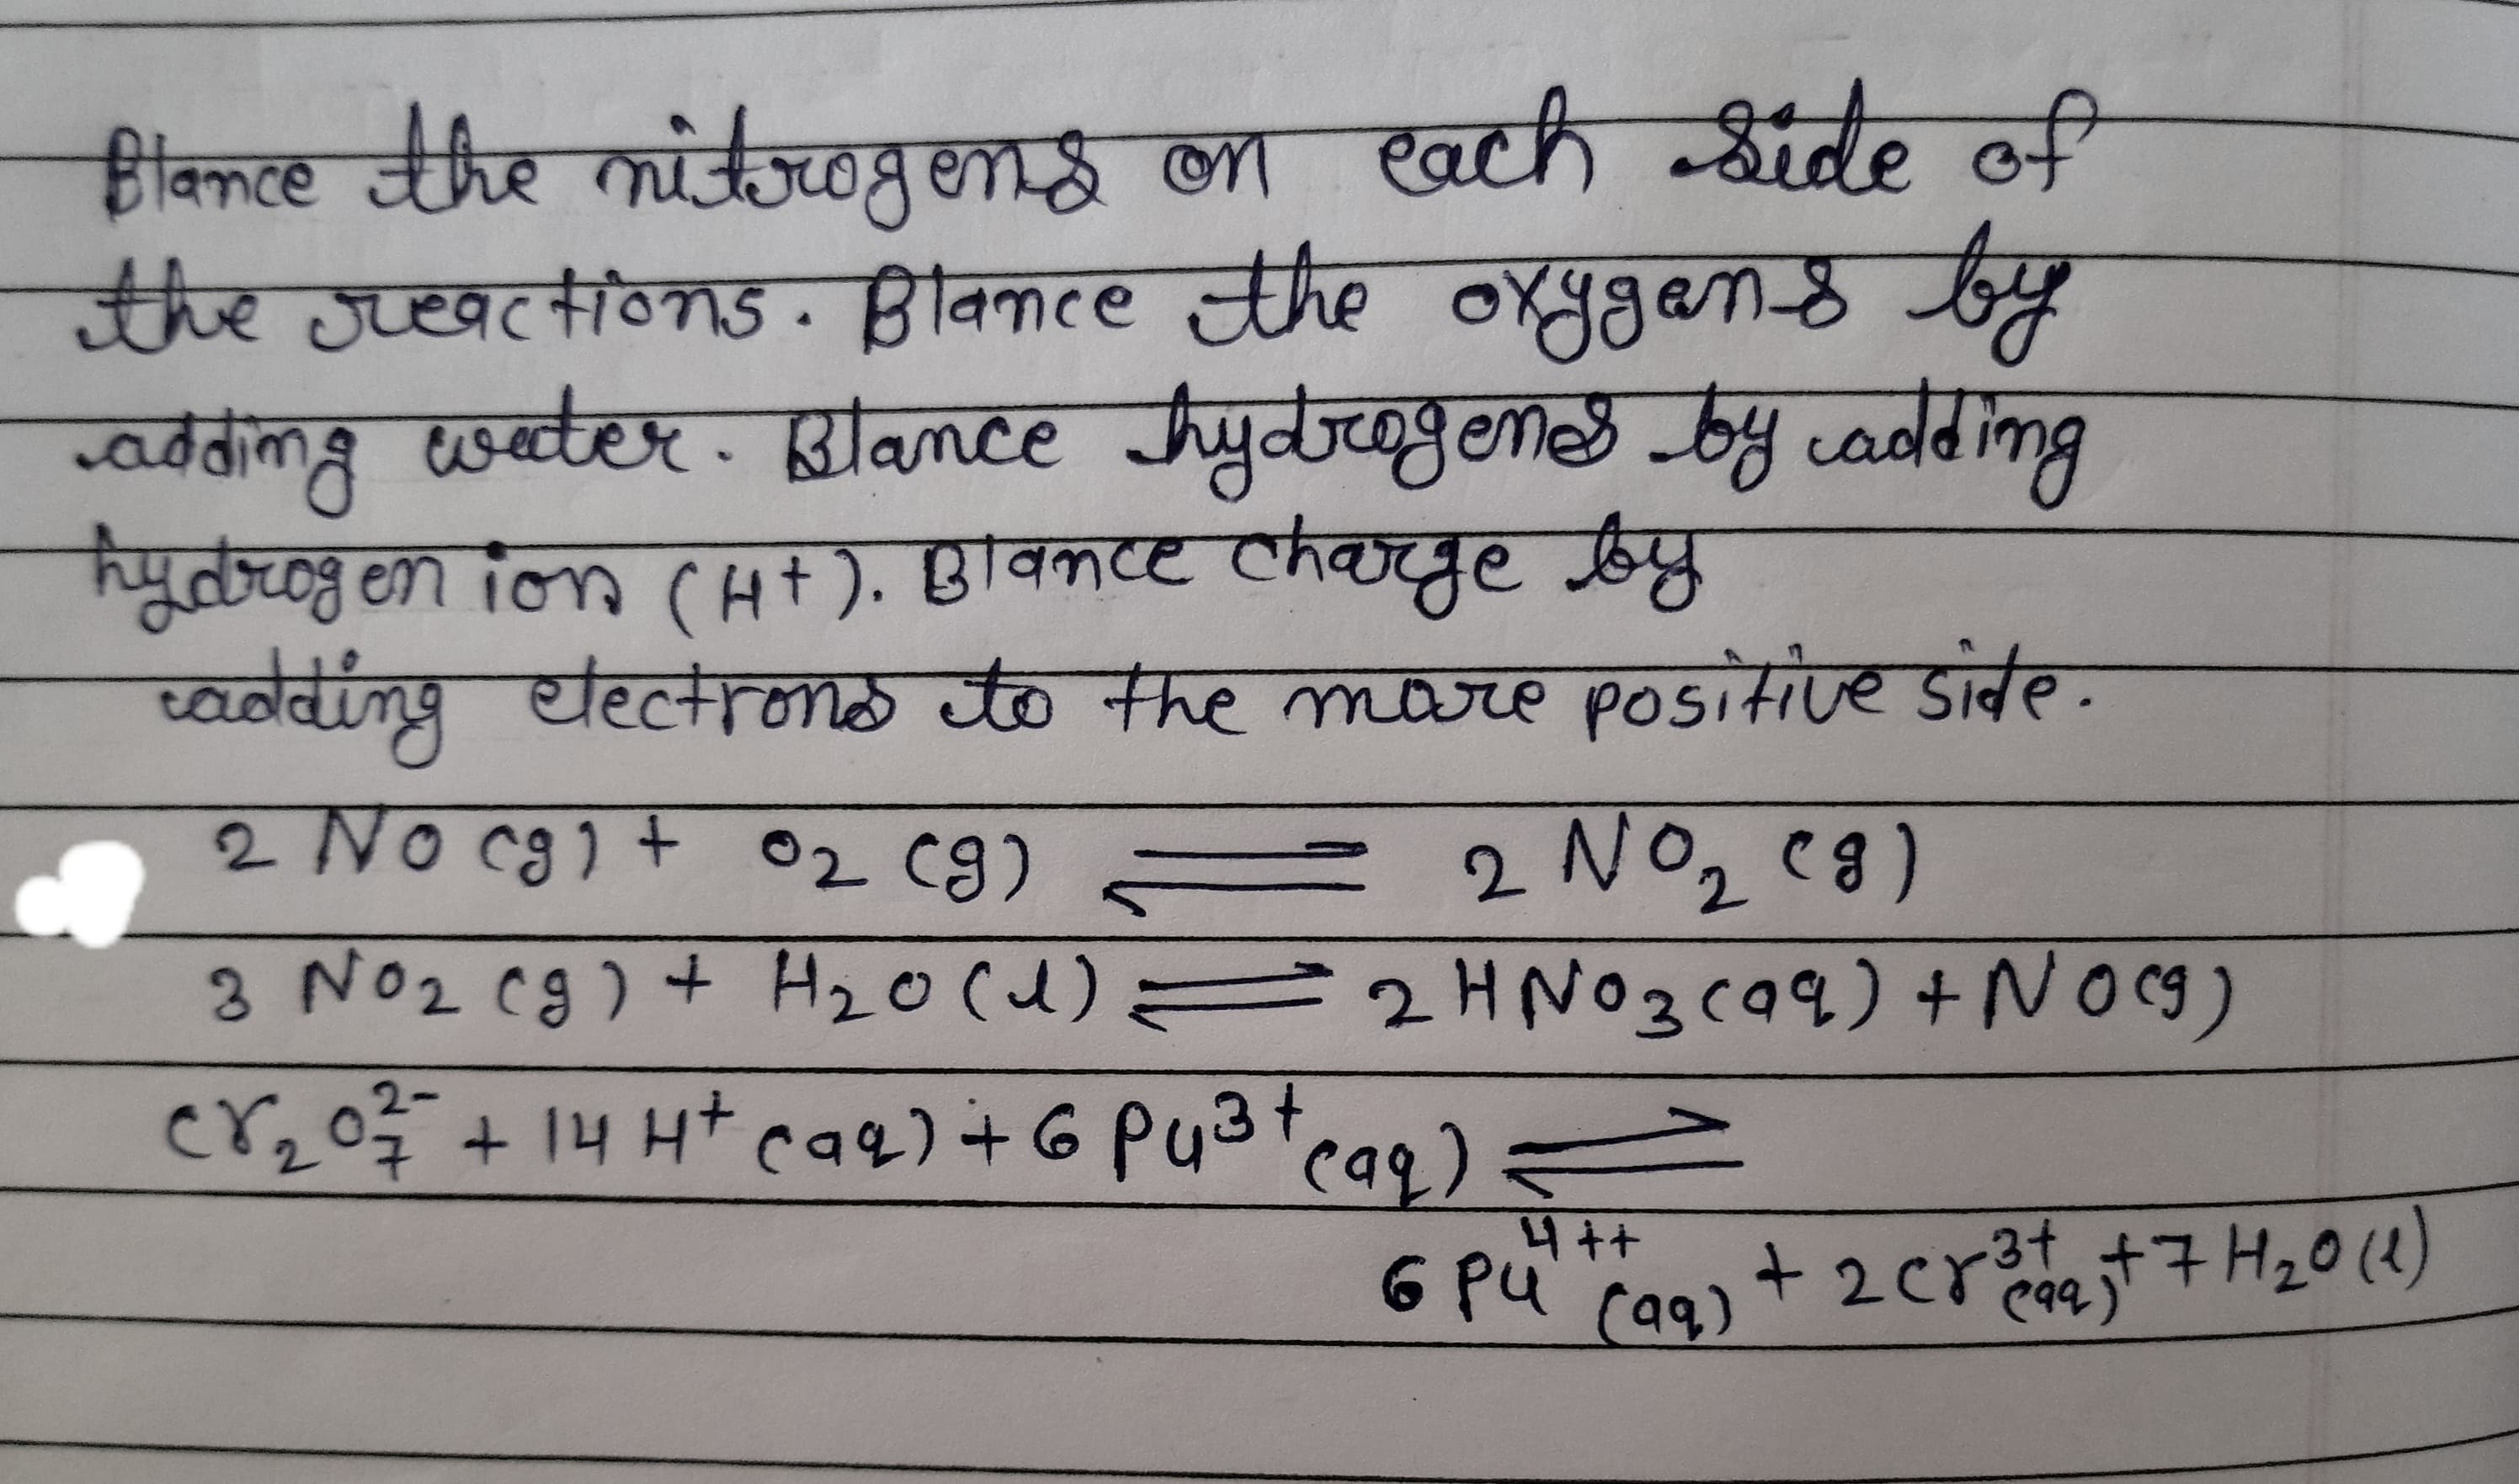 हिंकल्र गलिए भांडष ह ला एखटी .-8tde ली
the sreactions. Blamce the oYggan8 by
adding water. Btance Jydrogemes by cadding
tydbrog en ion (Ht). Blamce charge by
cadding etectrond to the mare positive side.
Side of
2 NOC81+ 02 C9)
2NO2 C8)
2HN03C99) +Nocg)
8 No2 C9) + HzO(d)=
+ 14 Ht ca4)+ 6 Pu3tcag)
(११)
) =
4++
4
6 Pu Cag) et7 H20(4)
+2cr3
(aq)
